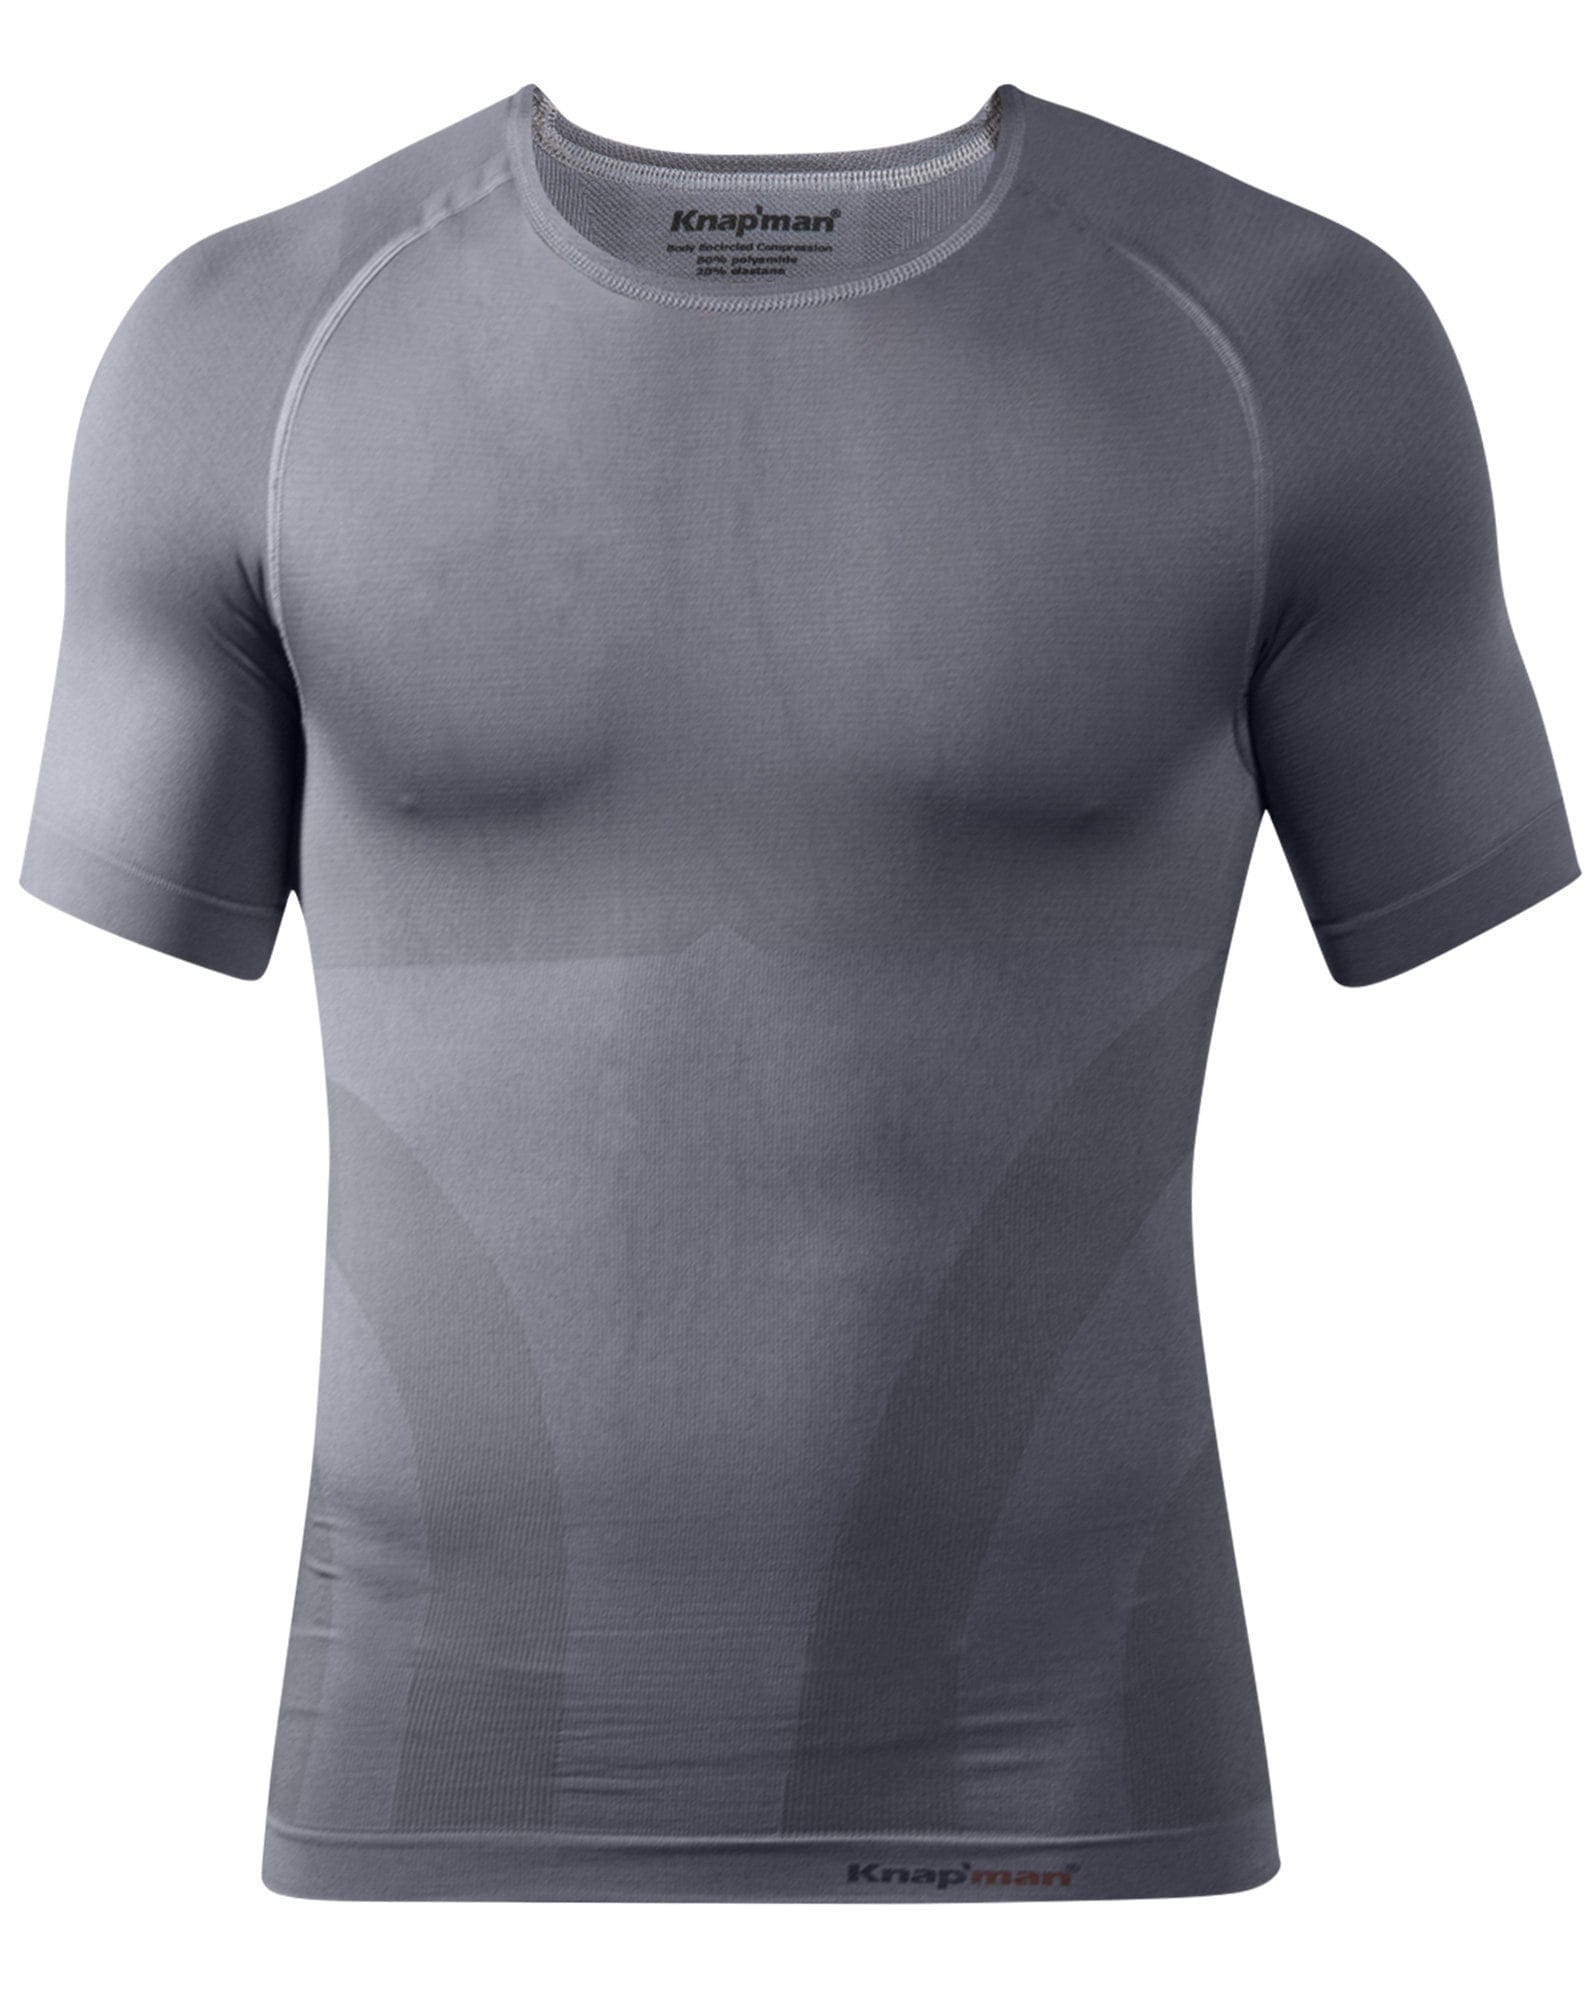 https://www.knapman.fr/product/91-large-knapman-mens-compression-shirt-crew-neck-grey.jpg